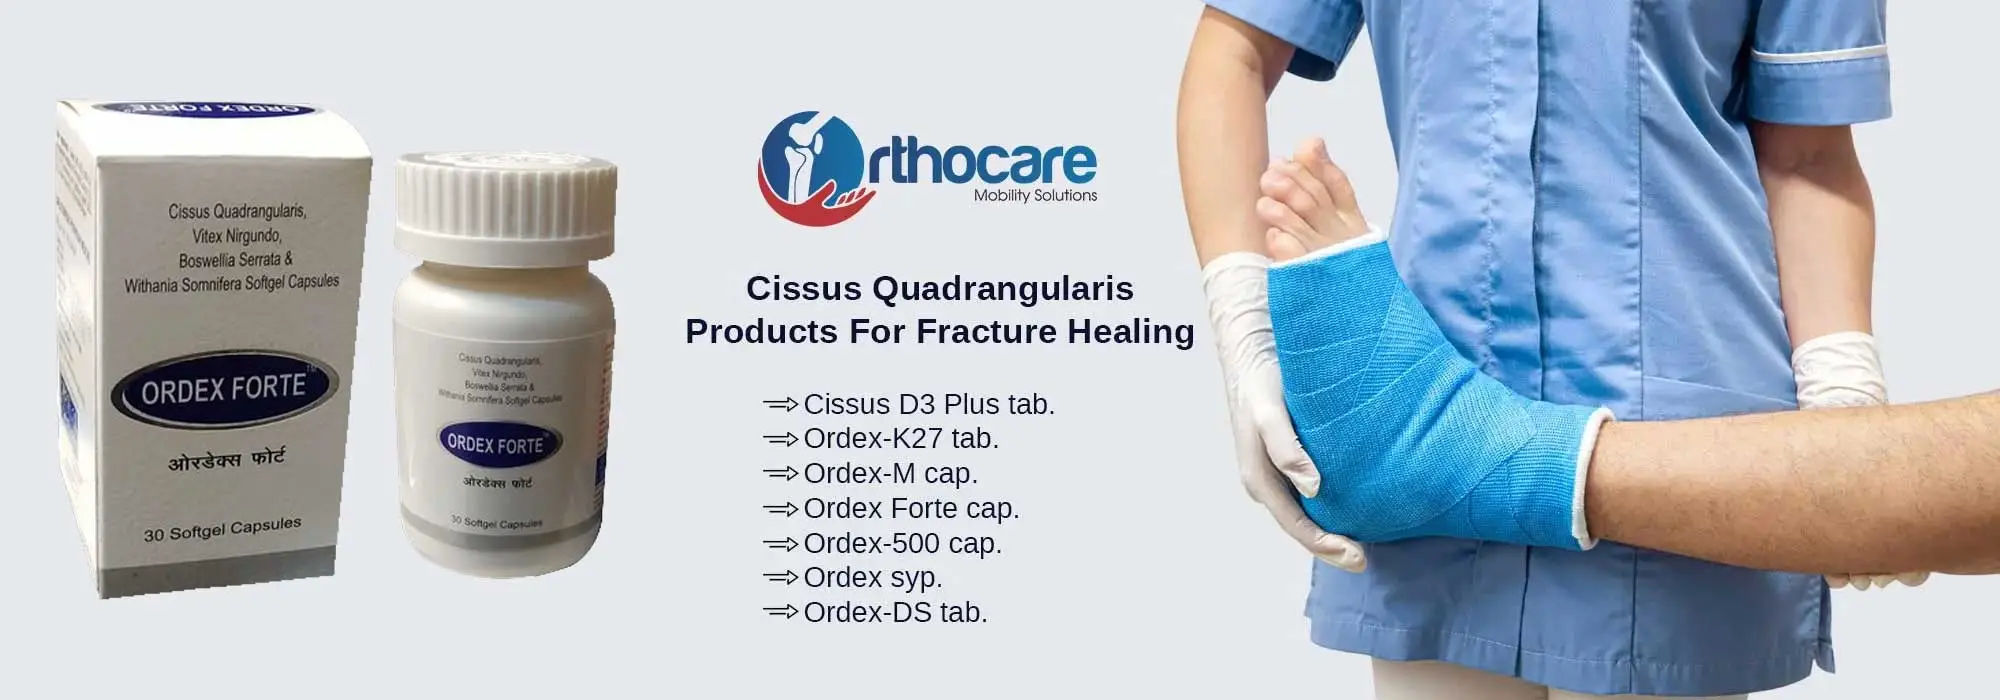 Cissus Quadrangularis Products For Fracture Healing Suppliers in Bhojpur